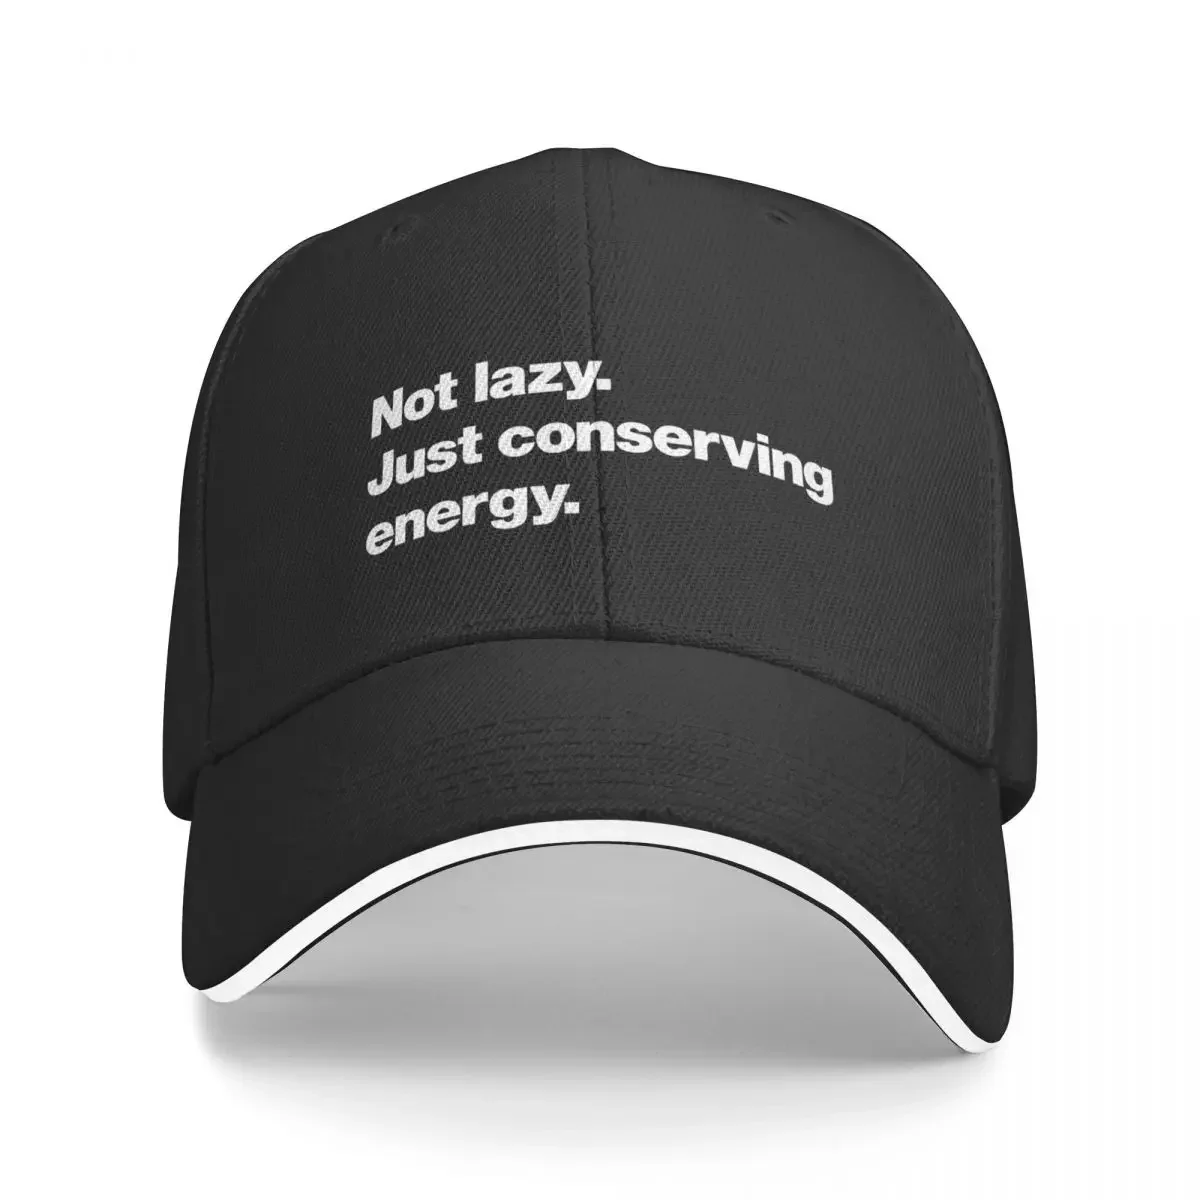 

New Not lazy. Just conserving energy. Baseball Cap Thermal Visor Christmas Hat black Caps Men Cap Luxury Brand Women's